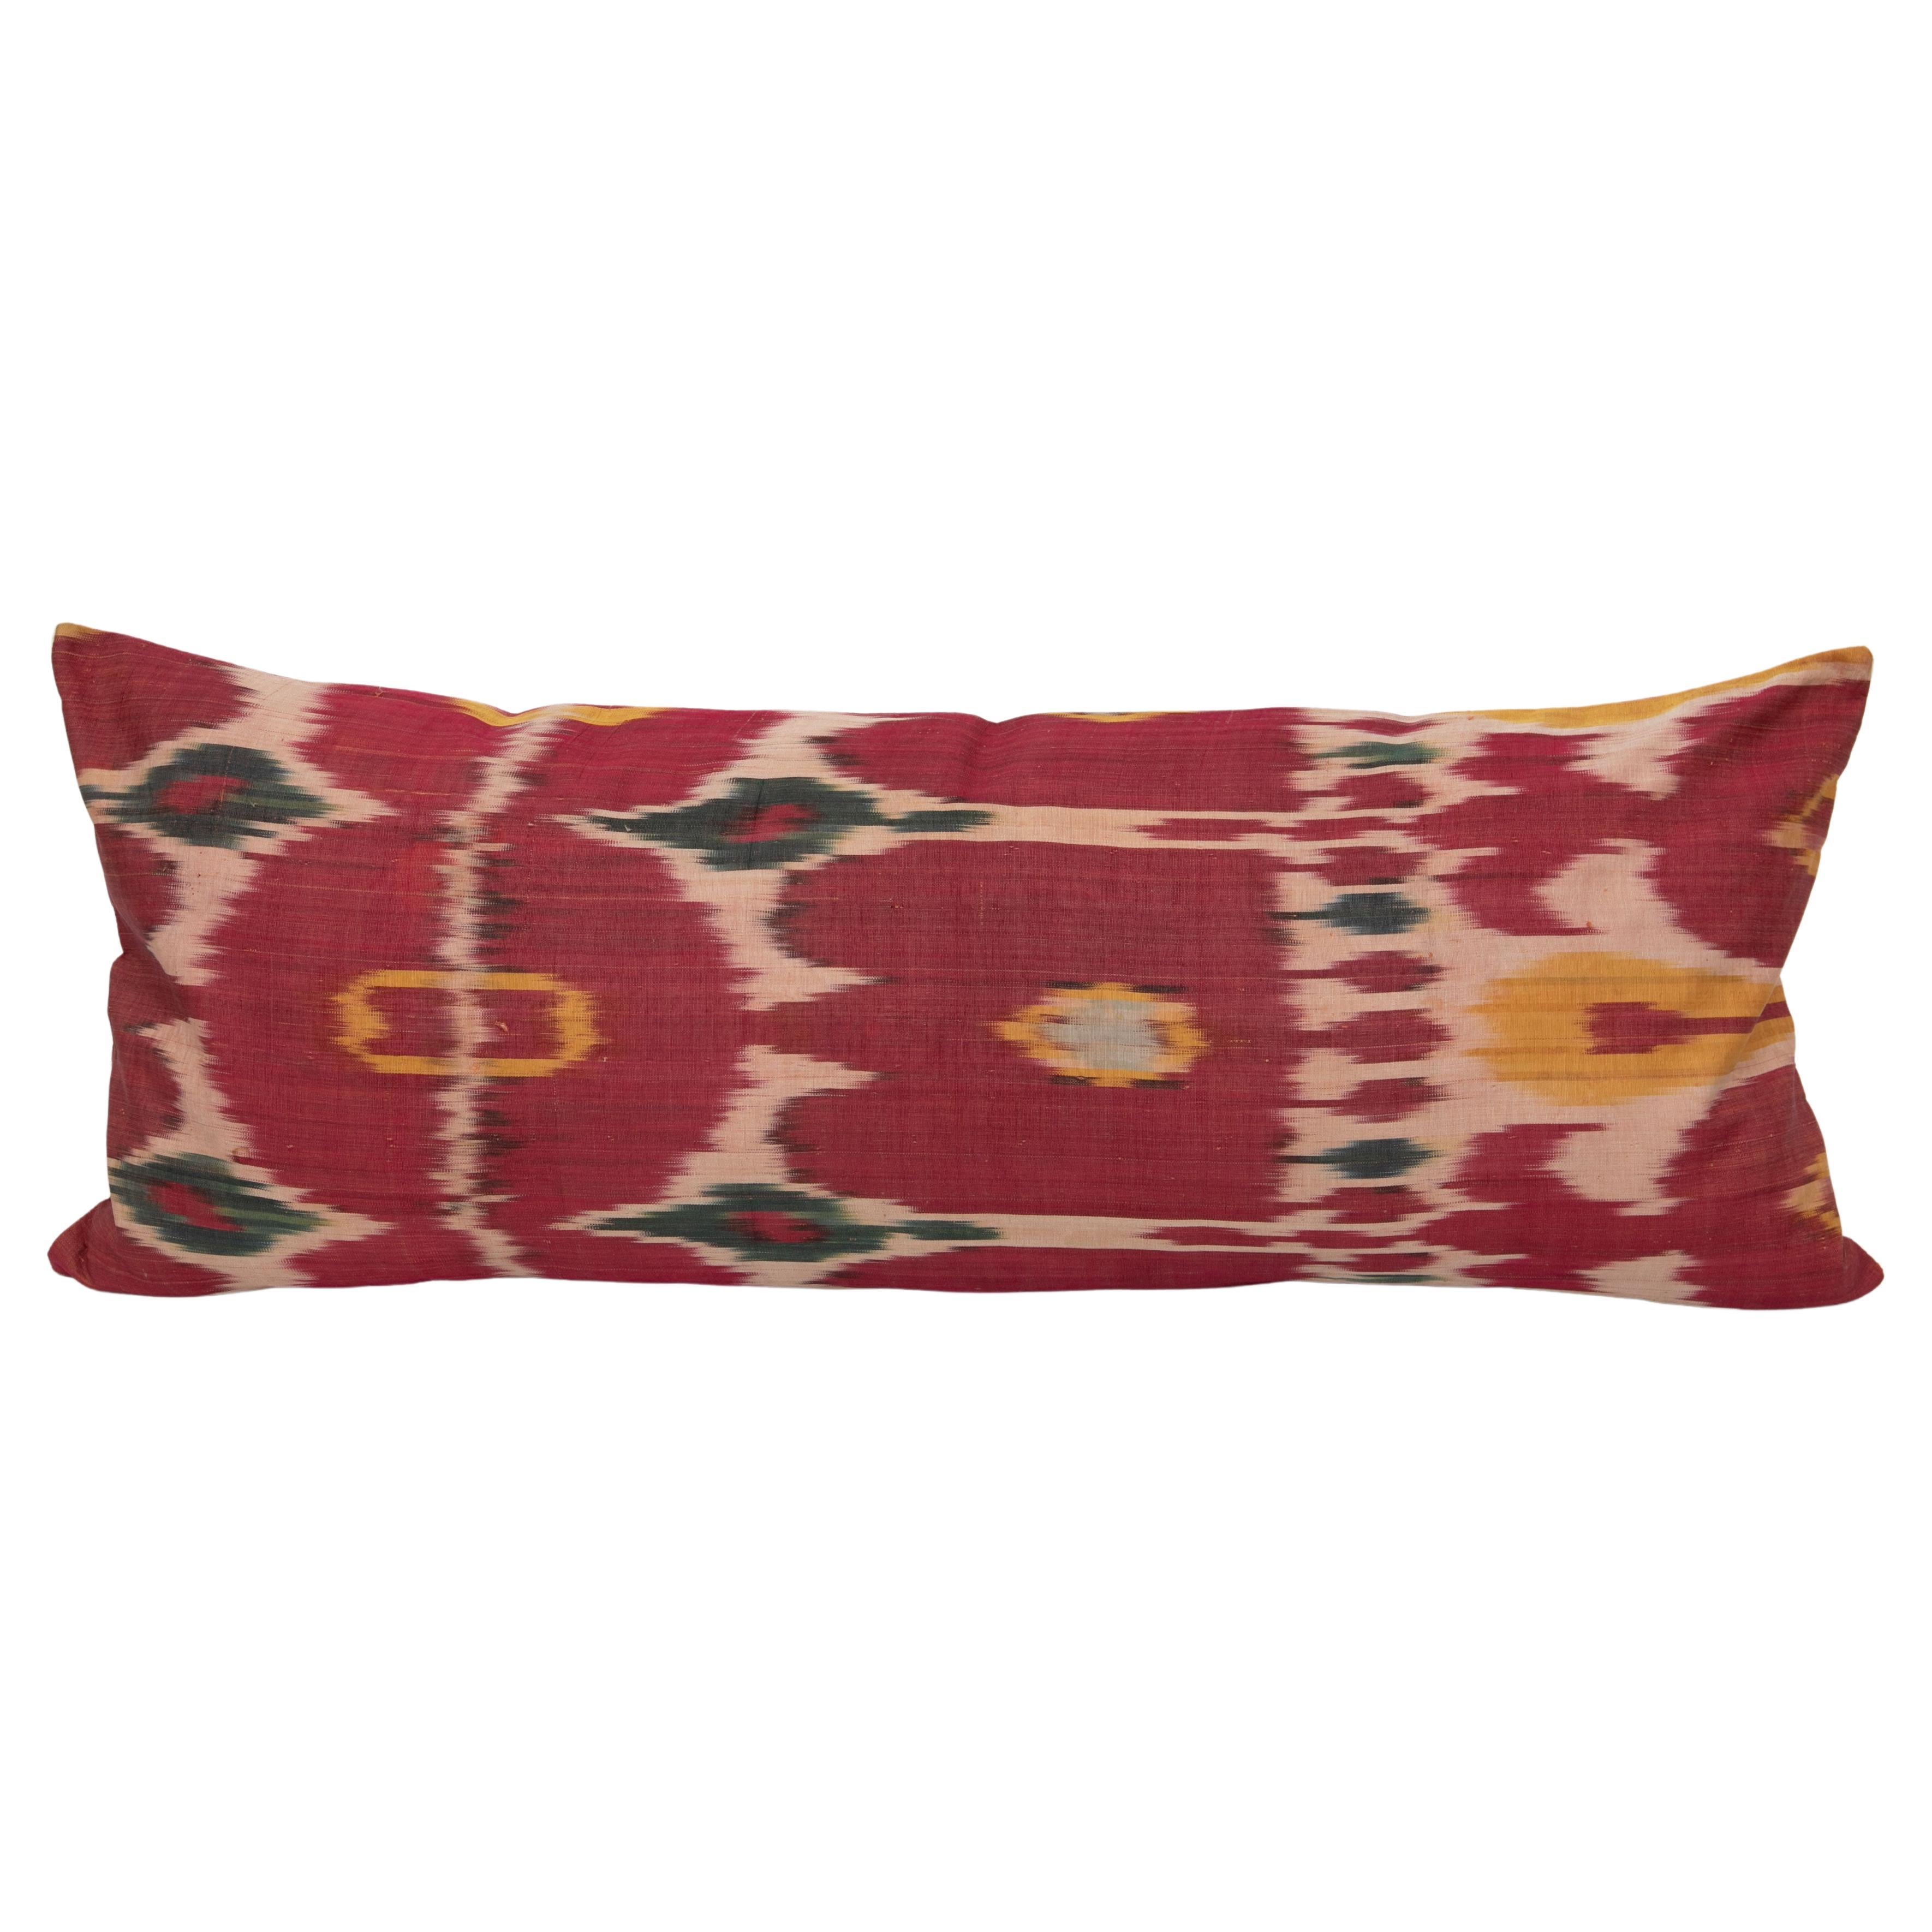 decorative kilim pillow anatolian pillow sofa pillow handmade kilim pillow sofa pillow wool pillow 16 x 16 inch kilim pillow cover no 3350